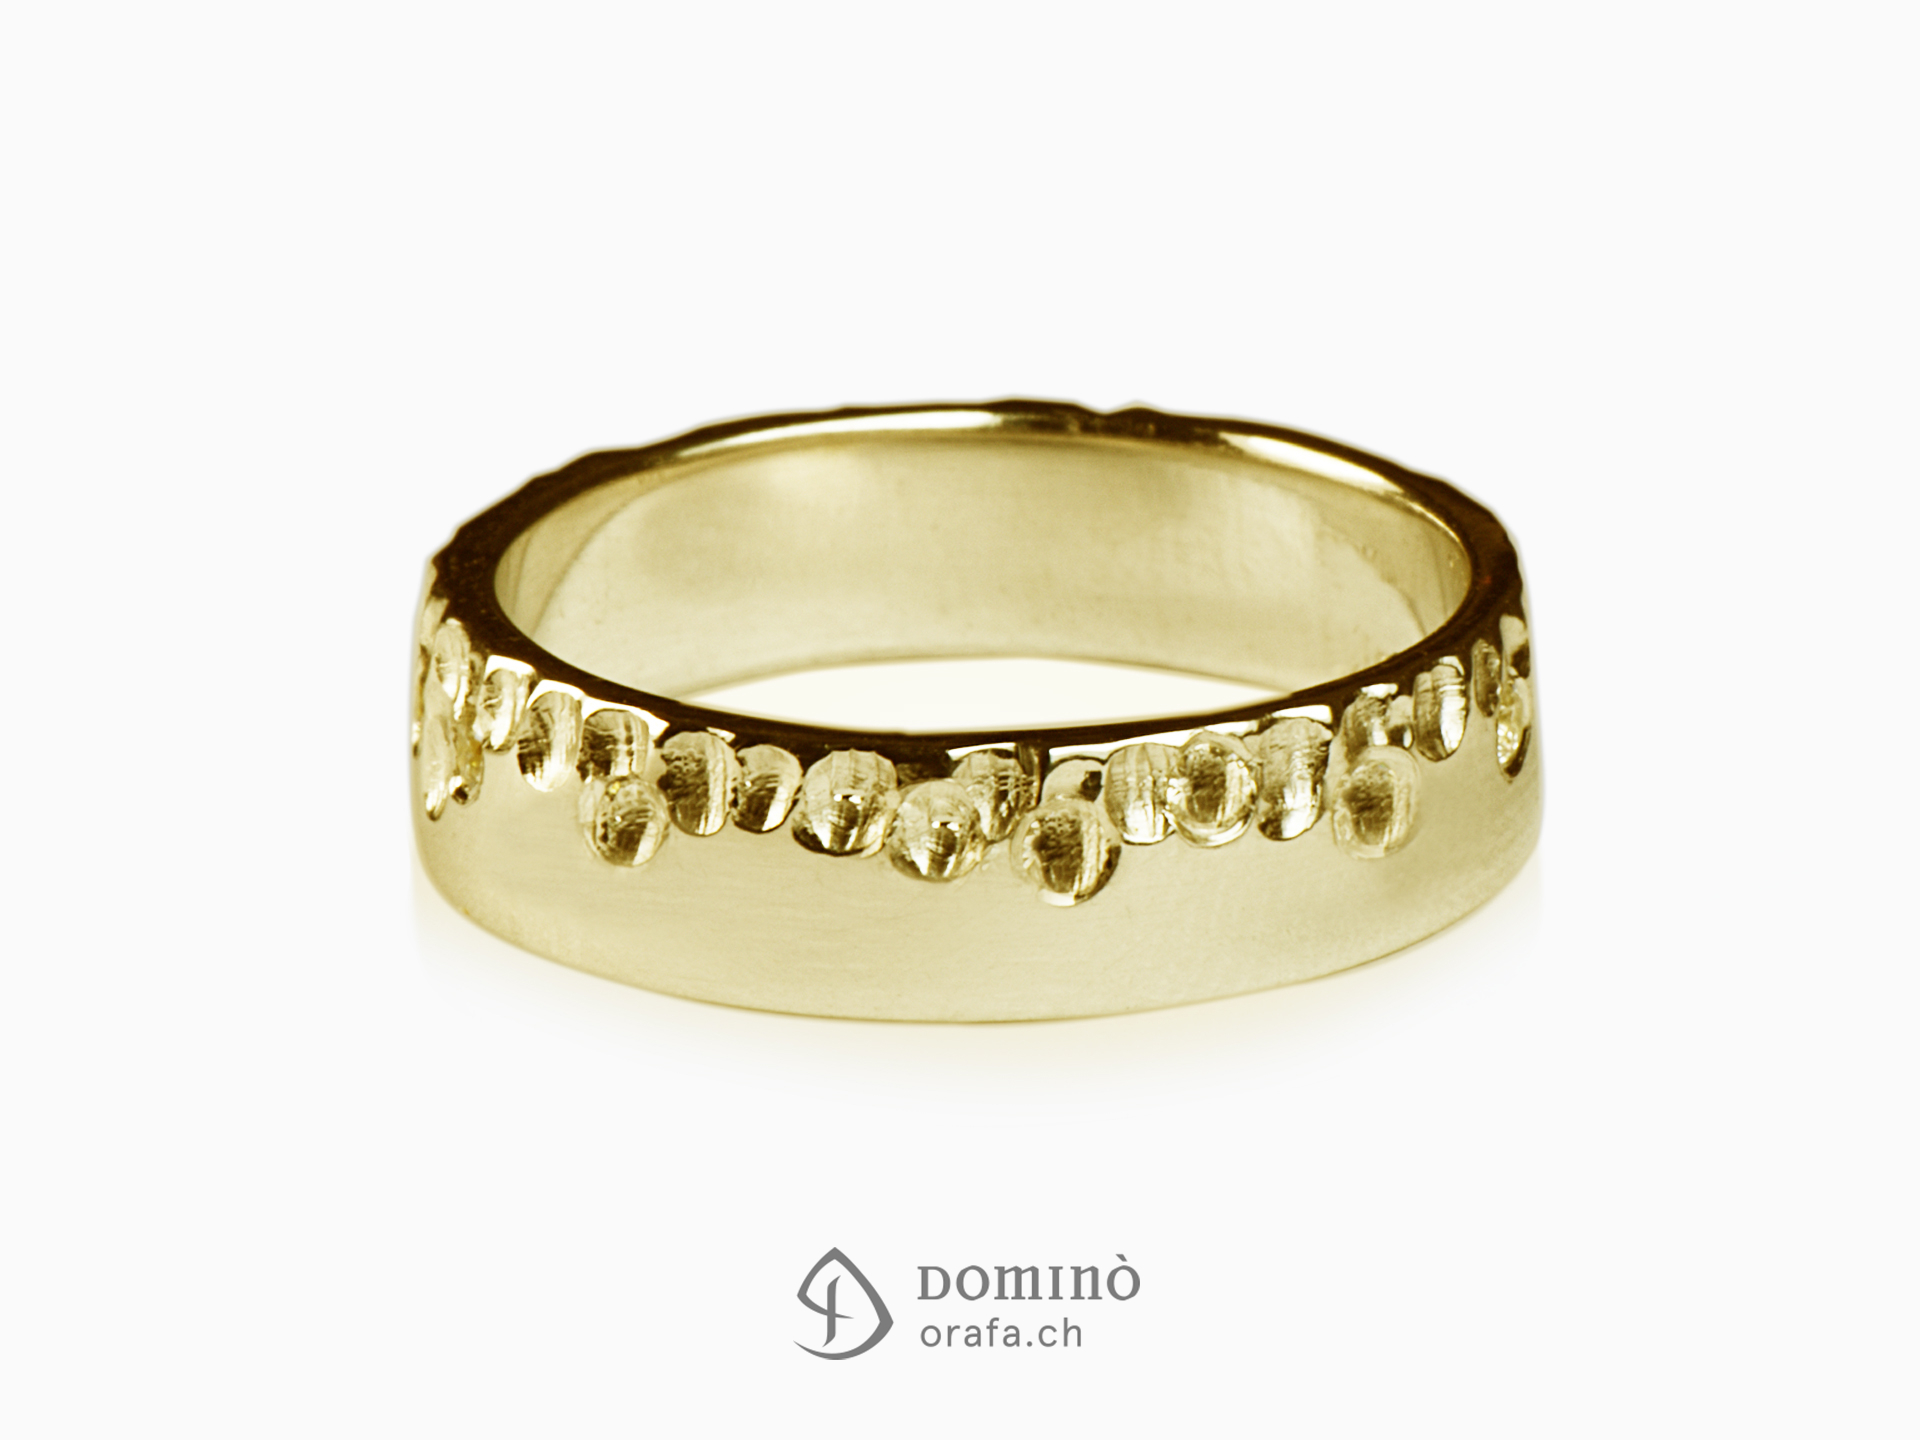 Gocce/polished ring